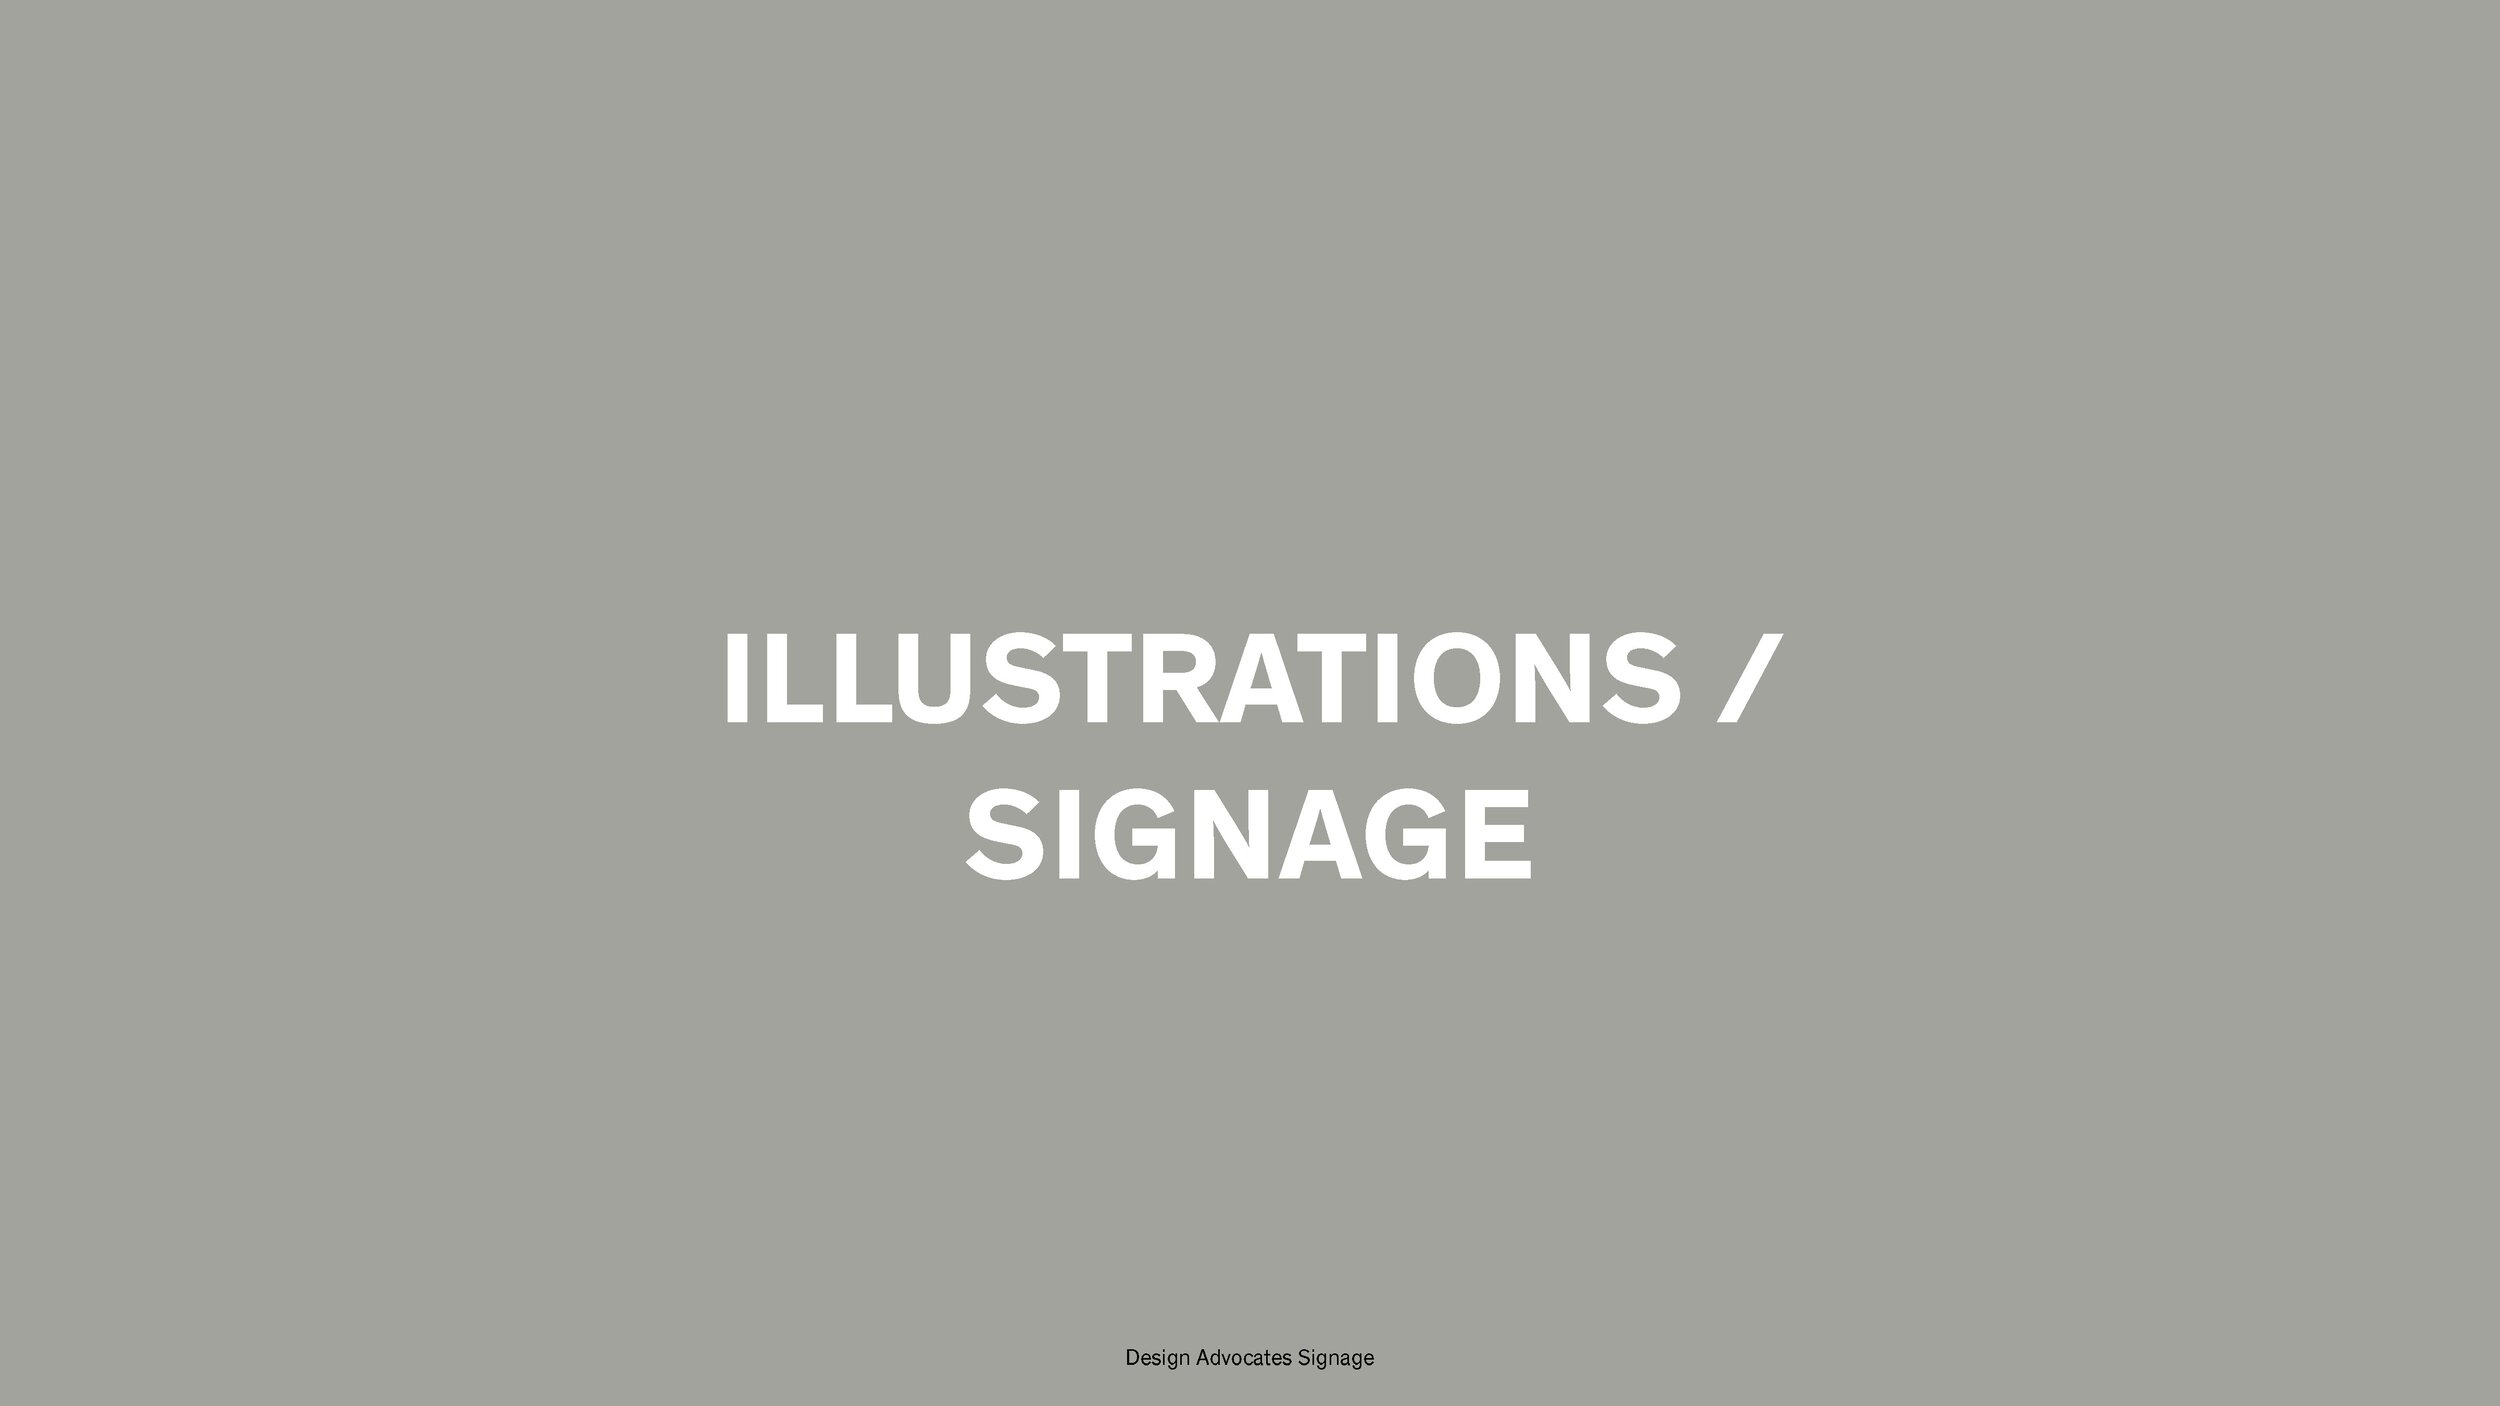 Design Advocates Signage_Page_11.jpg